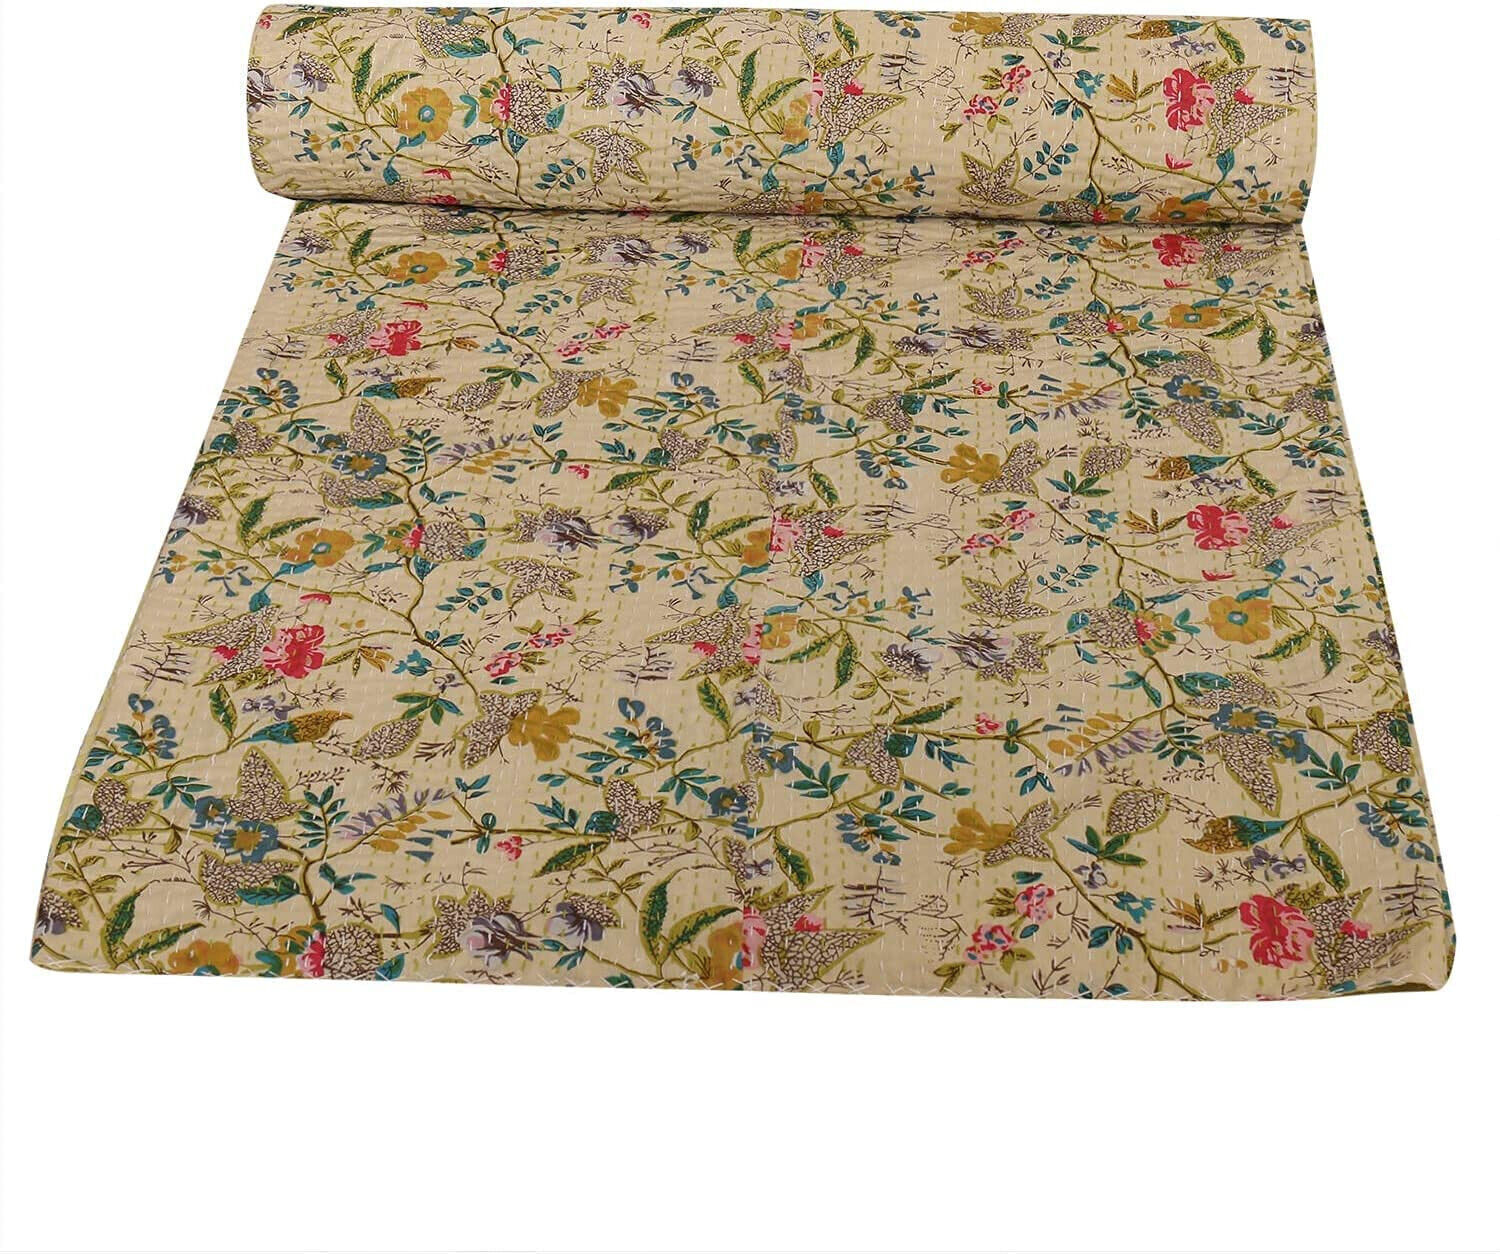 Indian Cotton Handmade Floral Print Kantha Quilt Bedding Bedspread Blanket Throw